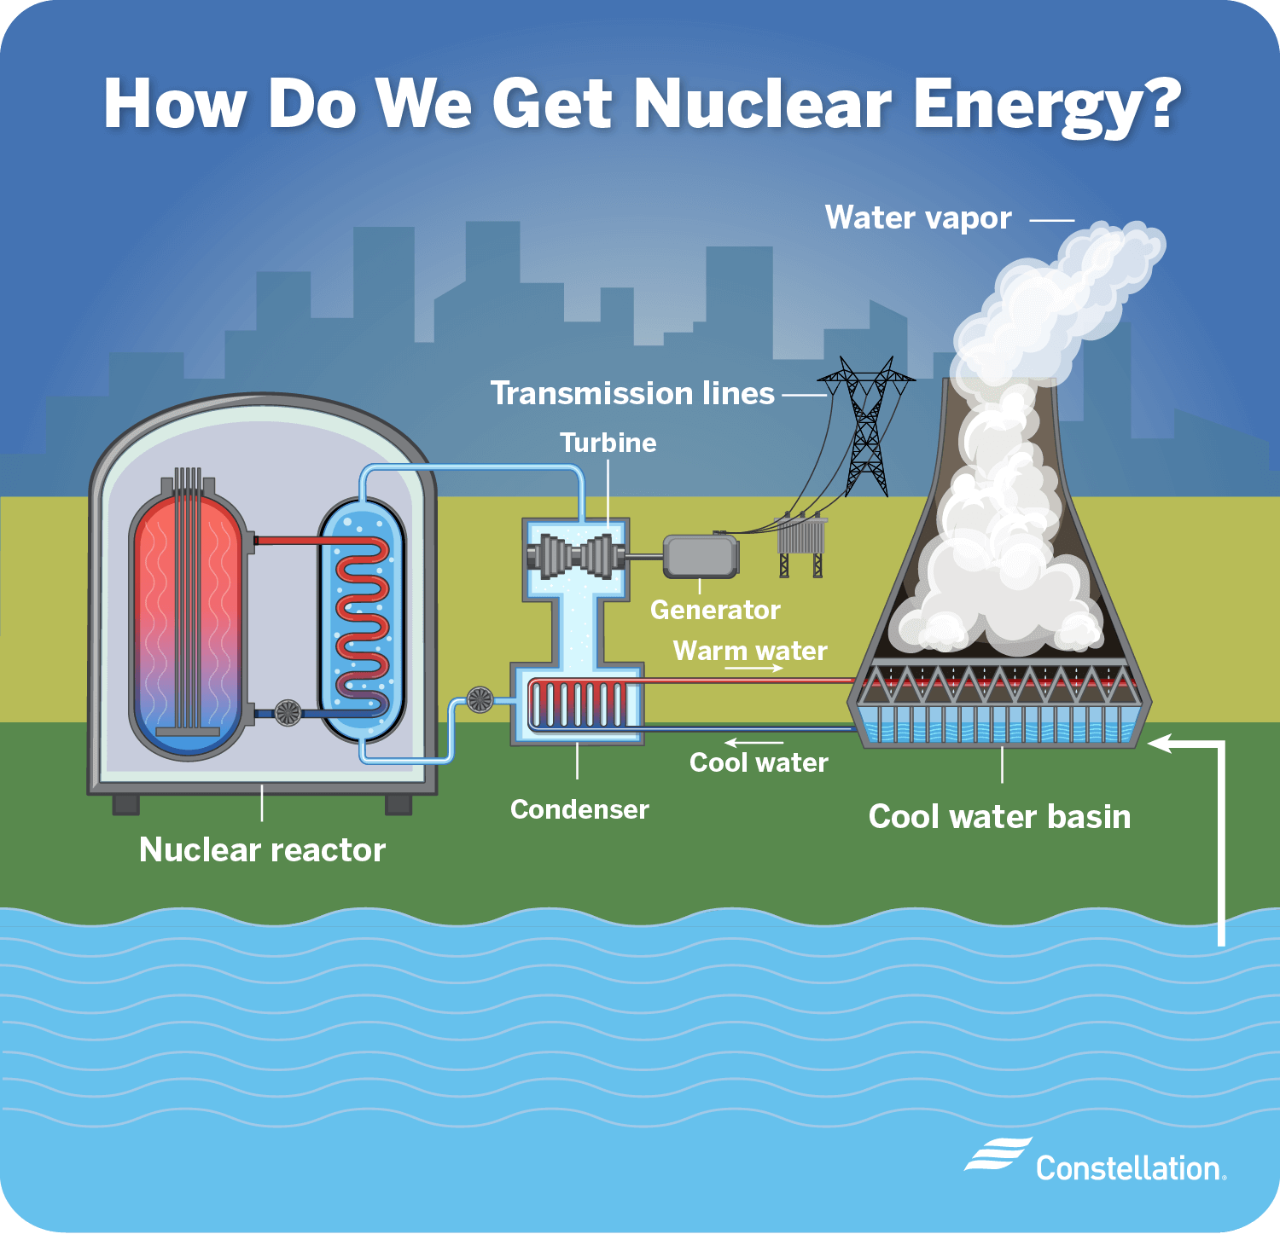 How do we get nuclear energy?